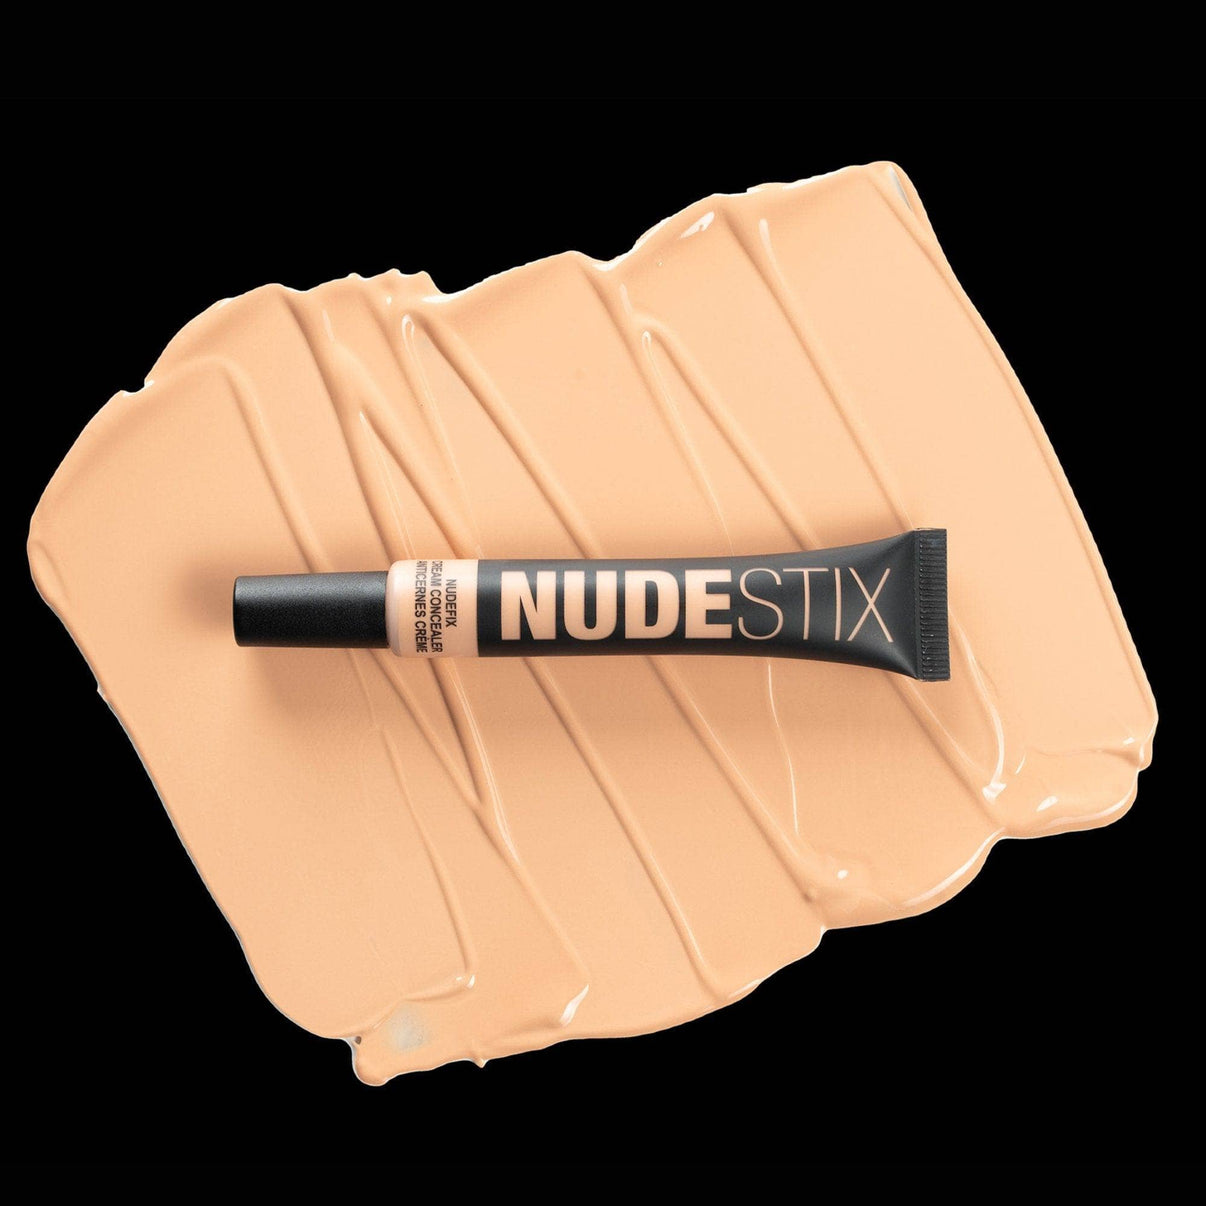 Nudefix cream concealer in shade nude 4 on top of texture swatch